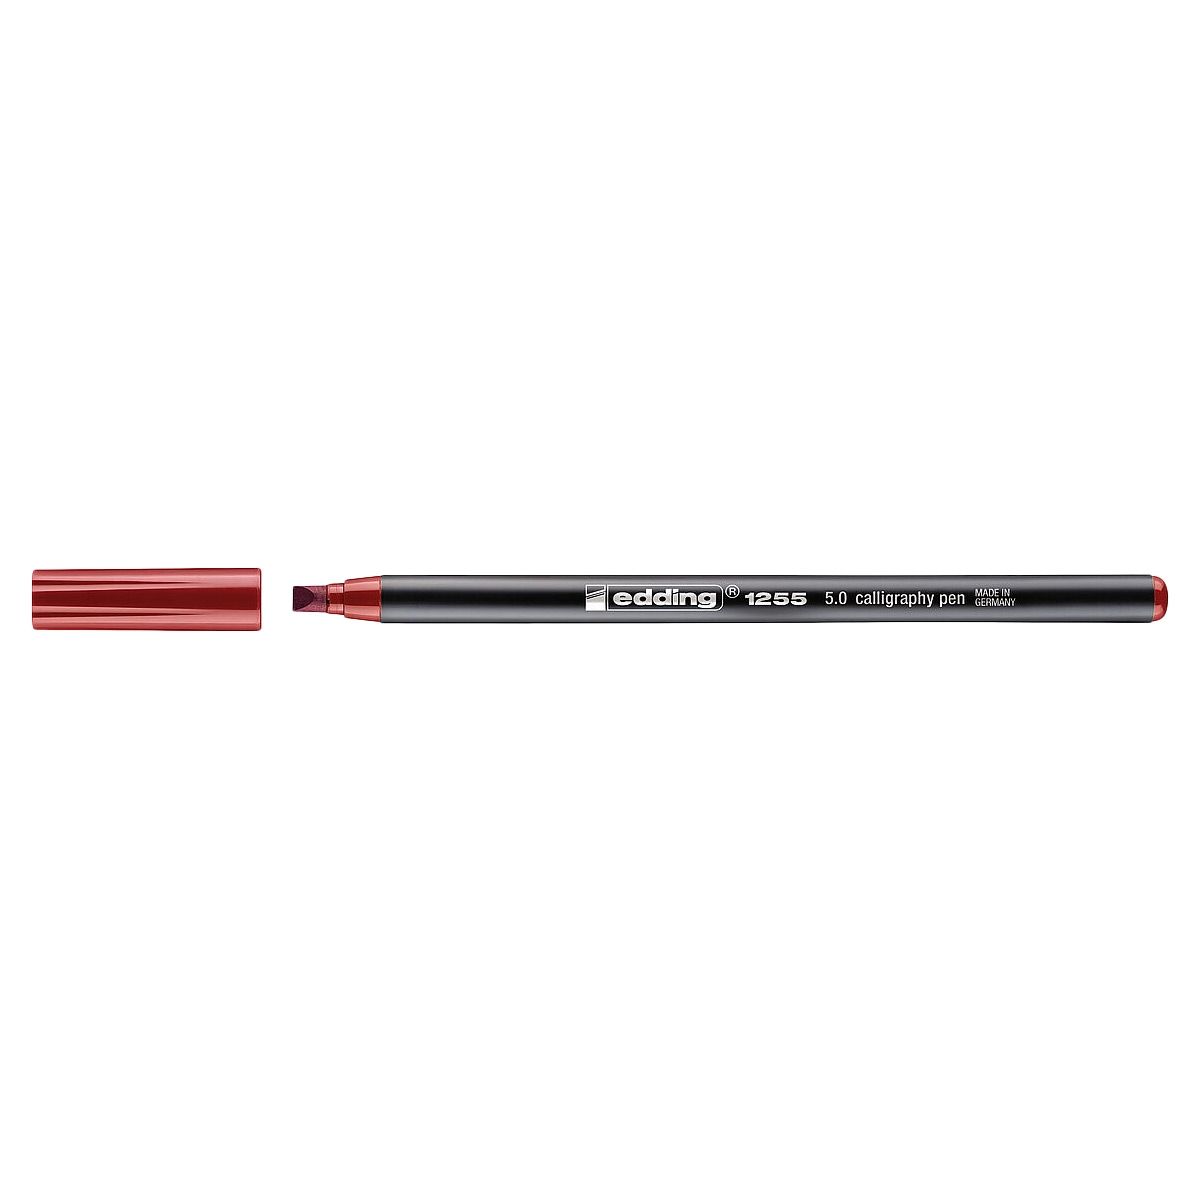 Edding Calligraphy Pen 5.0 - Crimson Lake